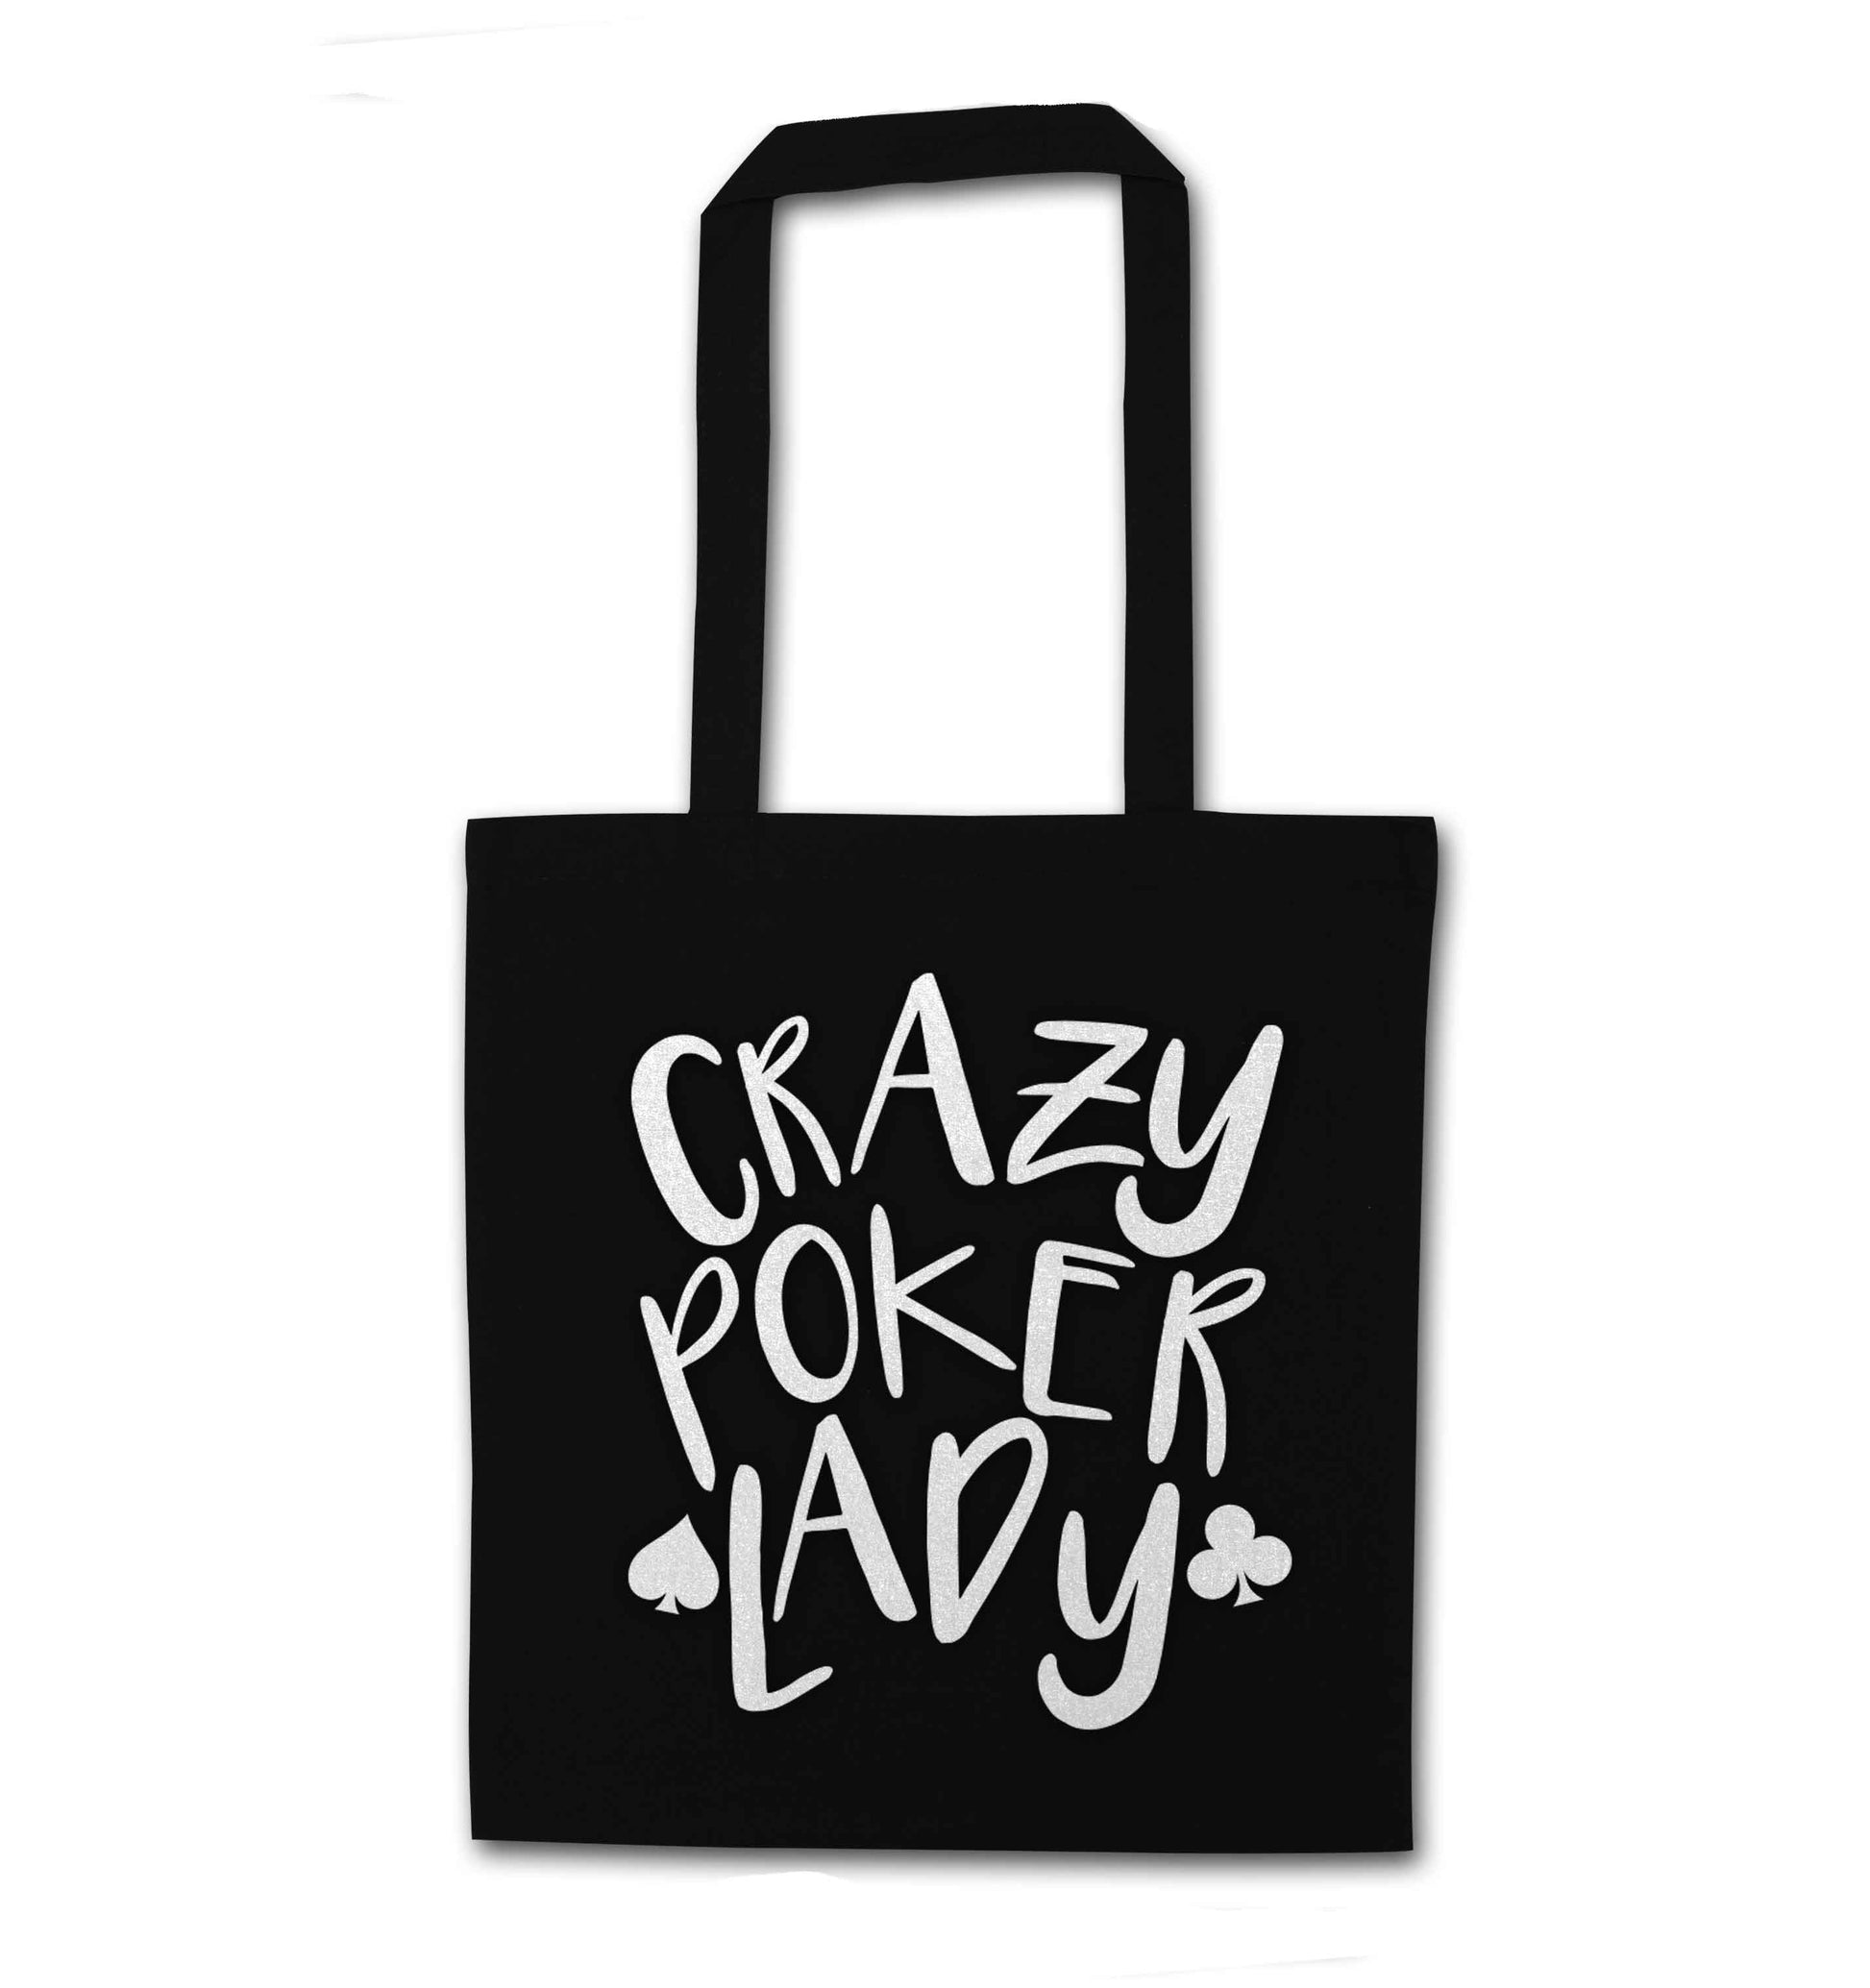 Crazy poker lady black tote bag